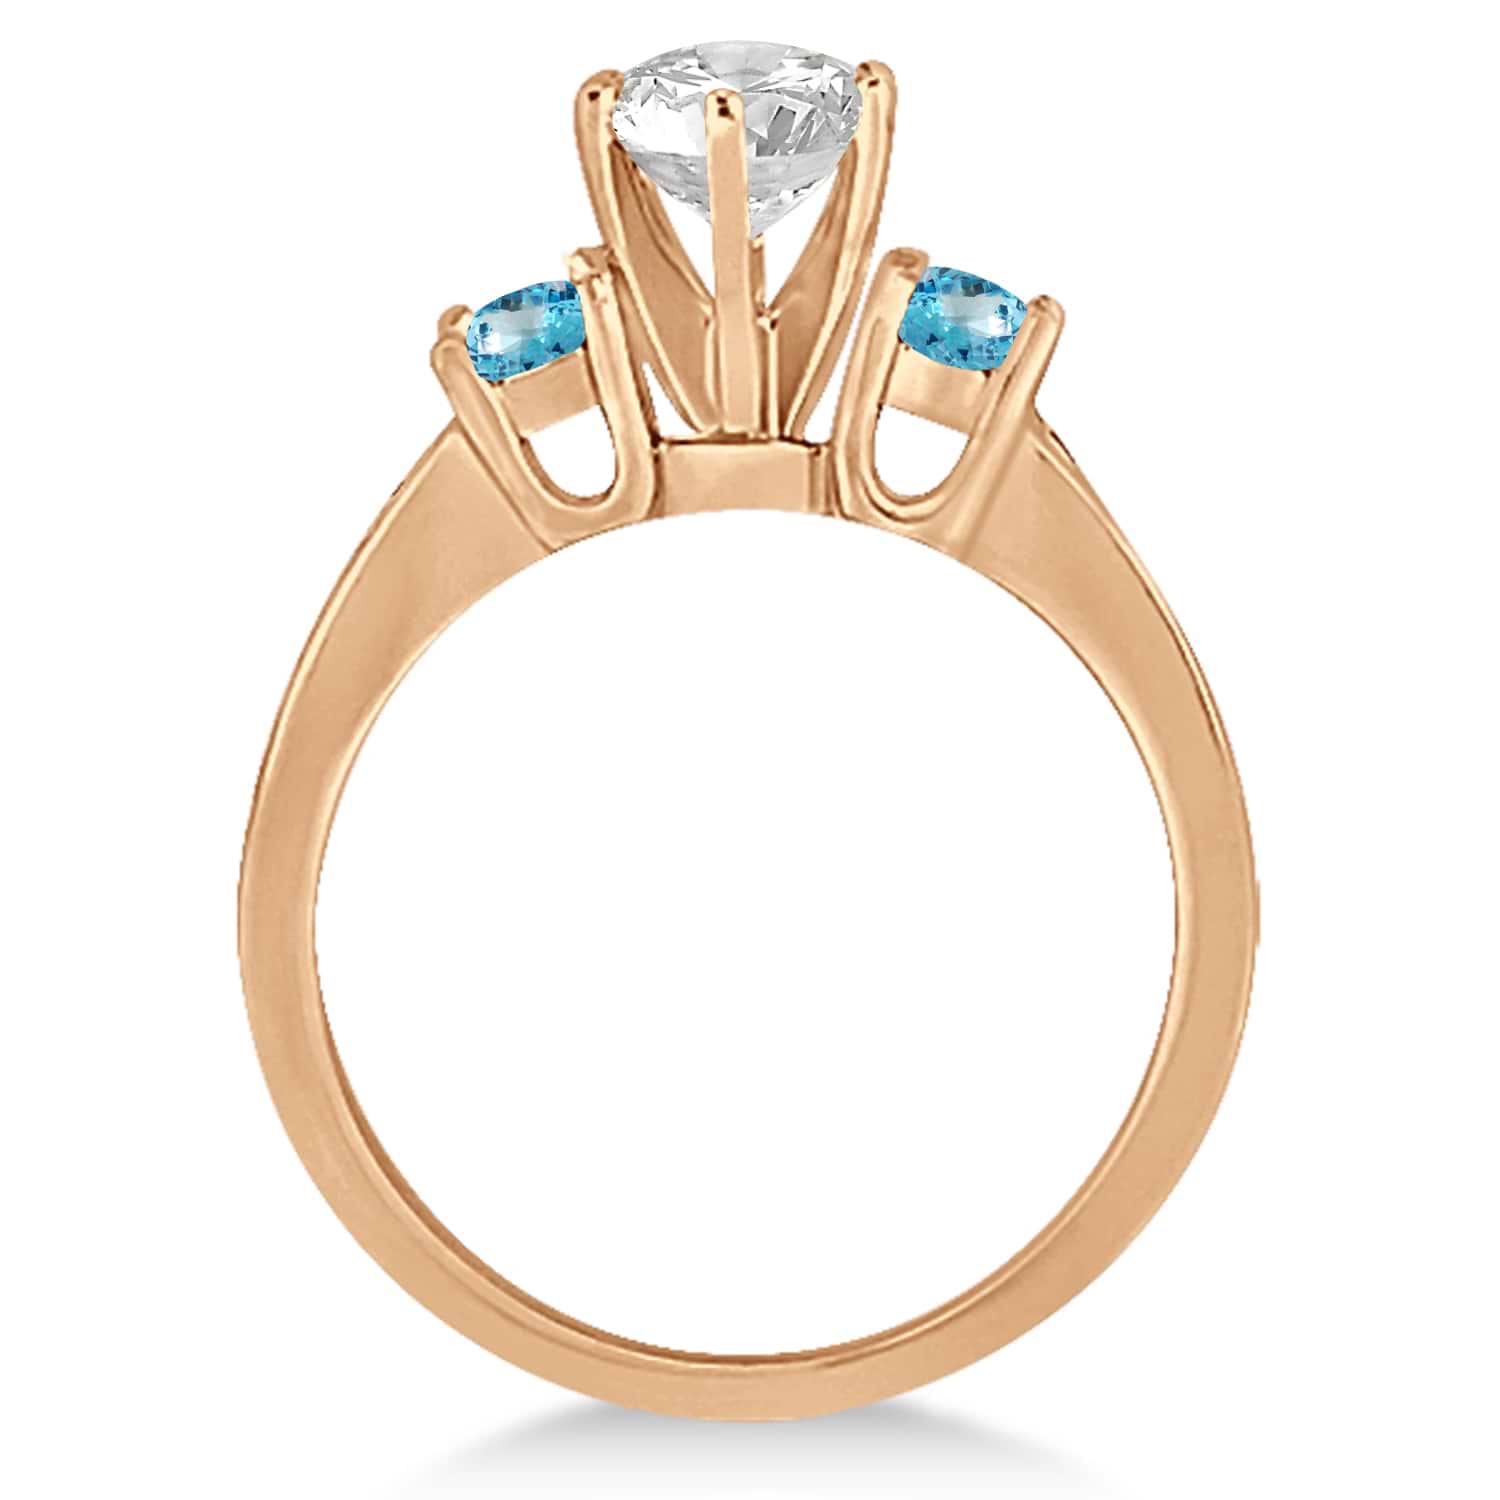 Three-Stone Blue Topaz & Diamond Engagement Ring 18k Y. Gold (0.45ct)